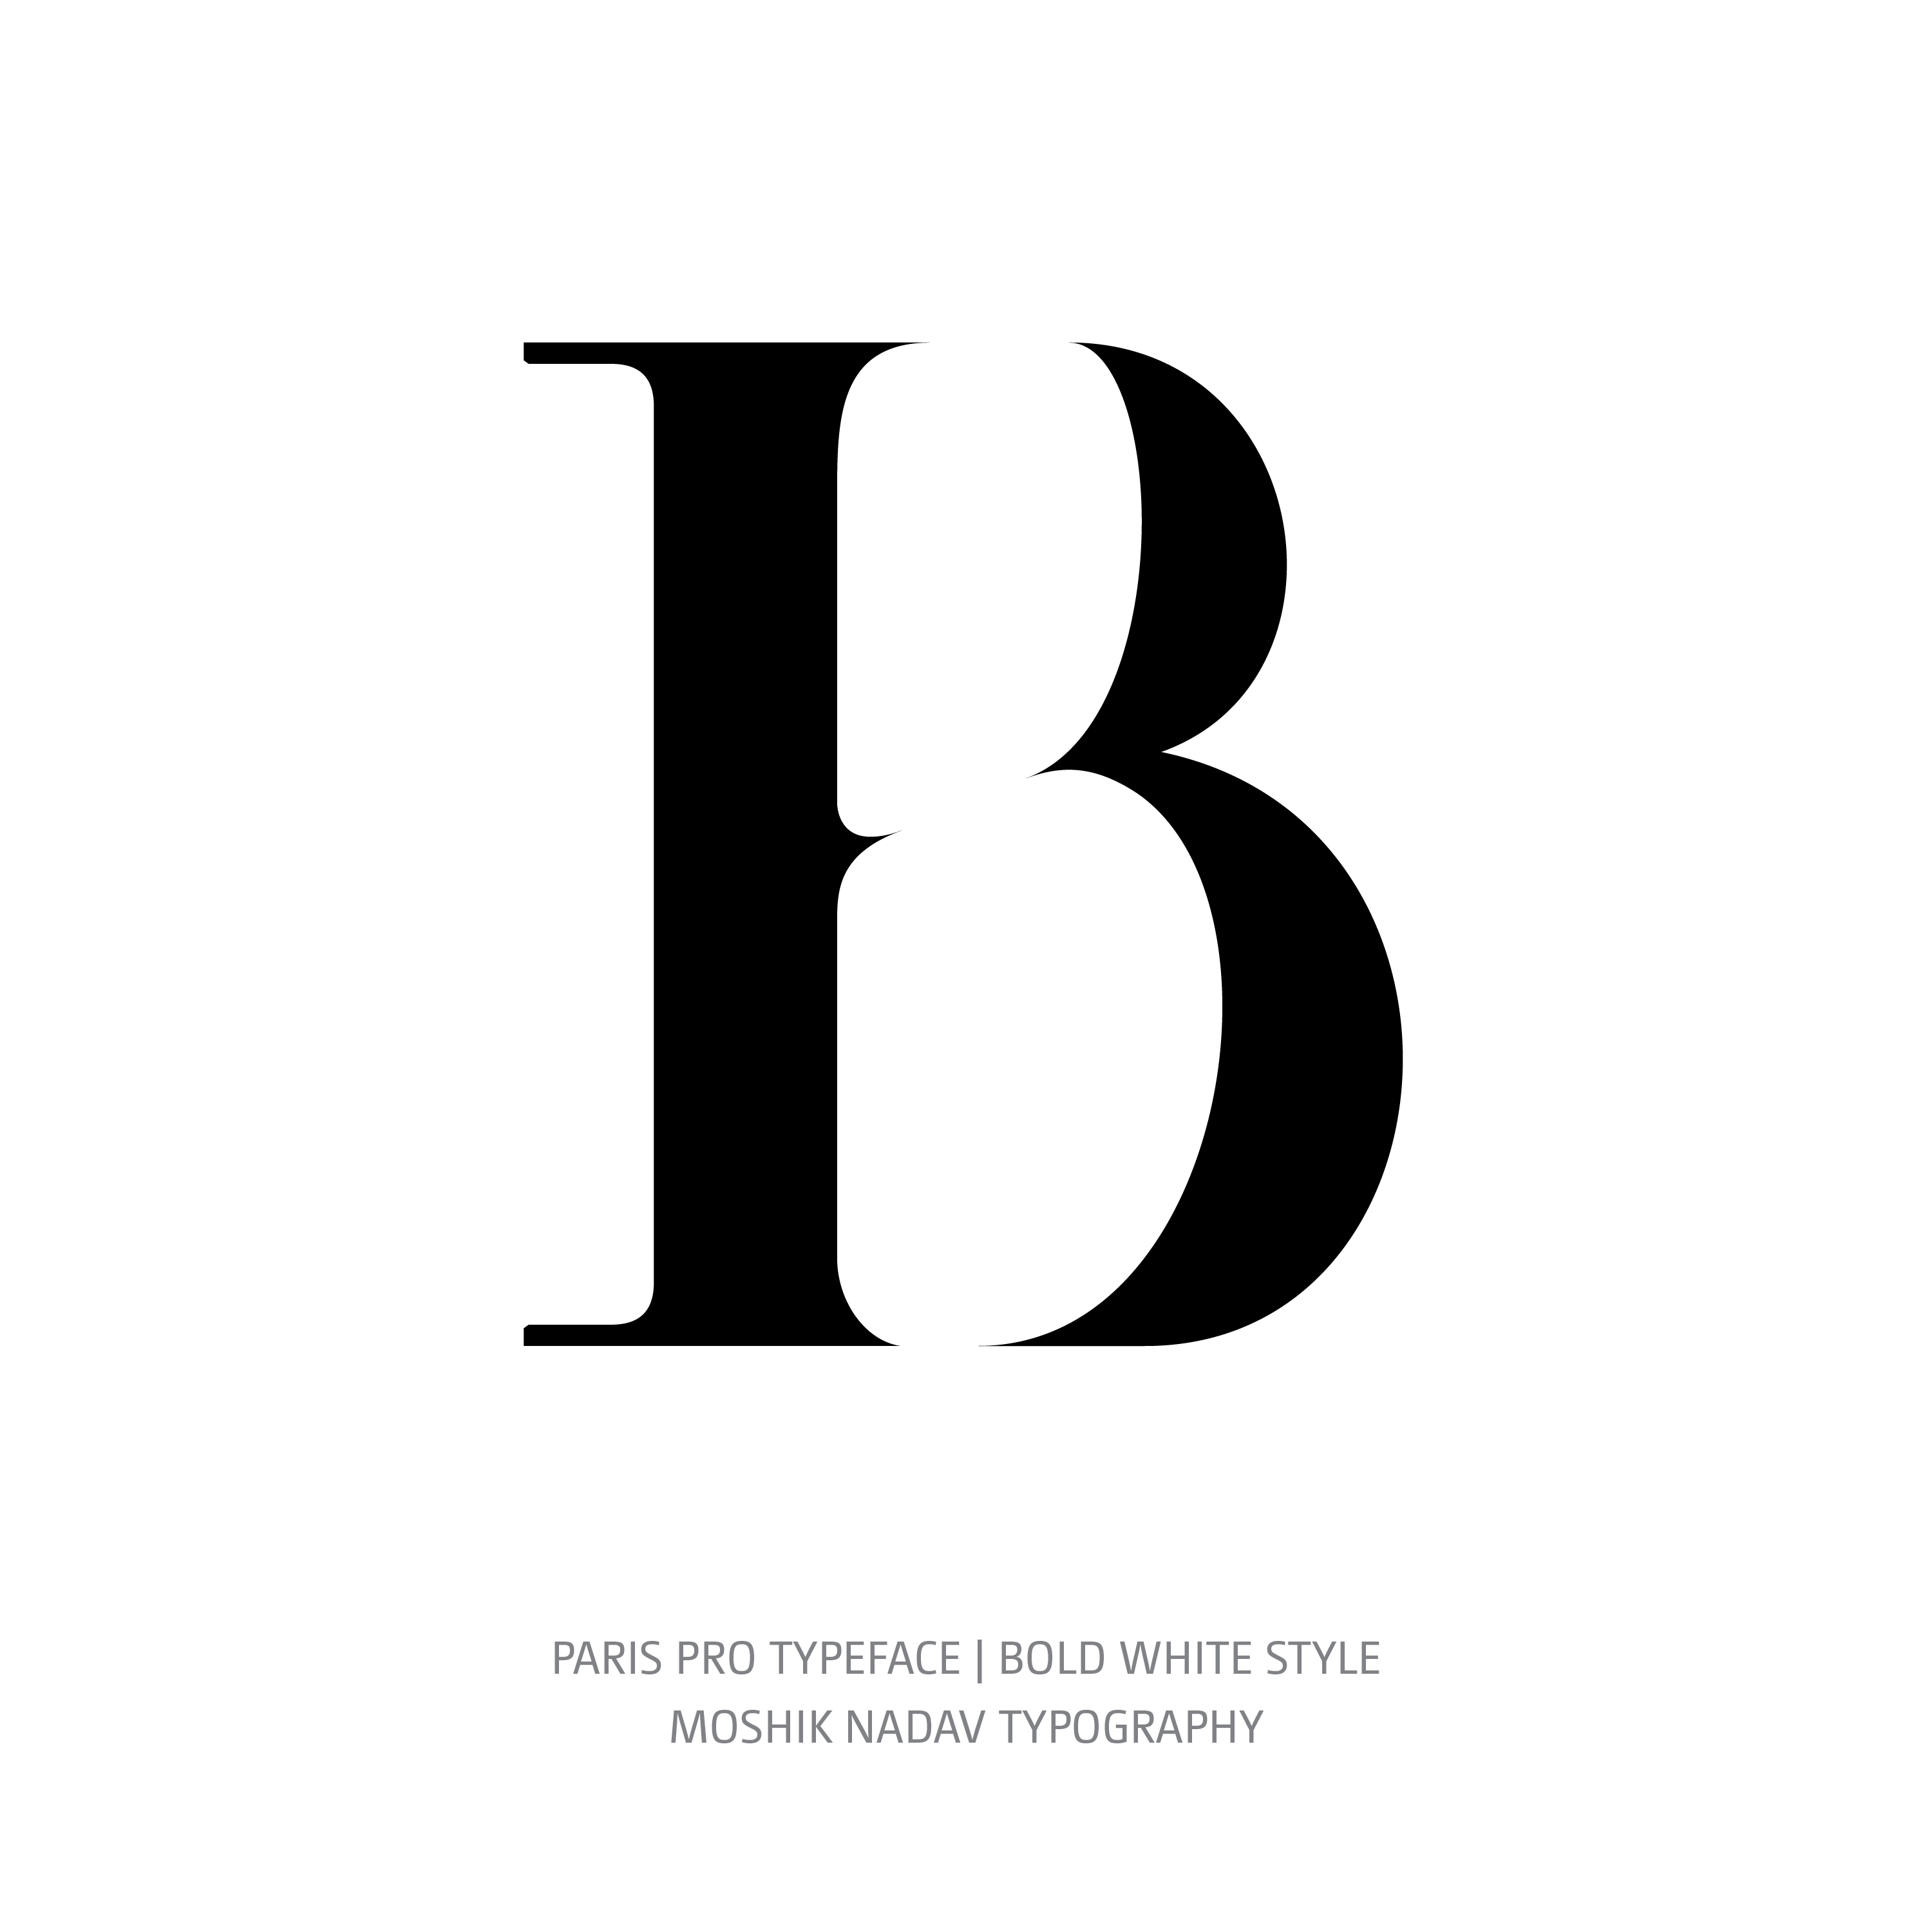 Paris Pro Typeface Bold White B